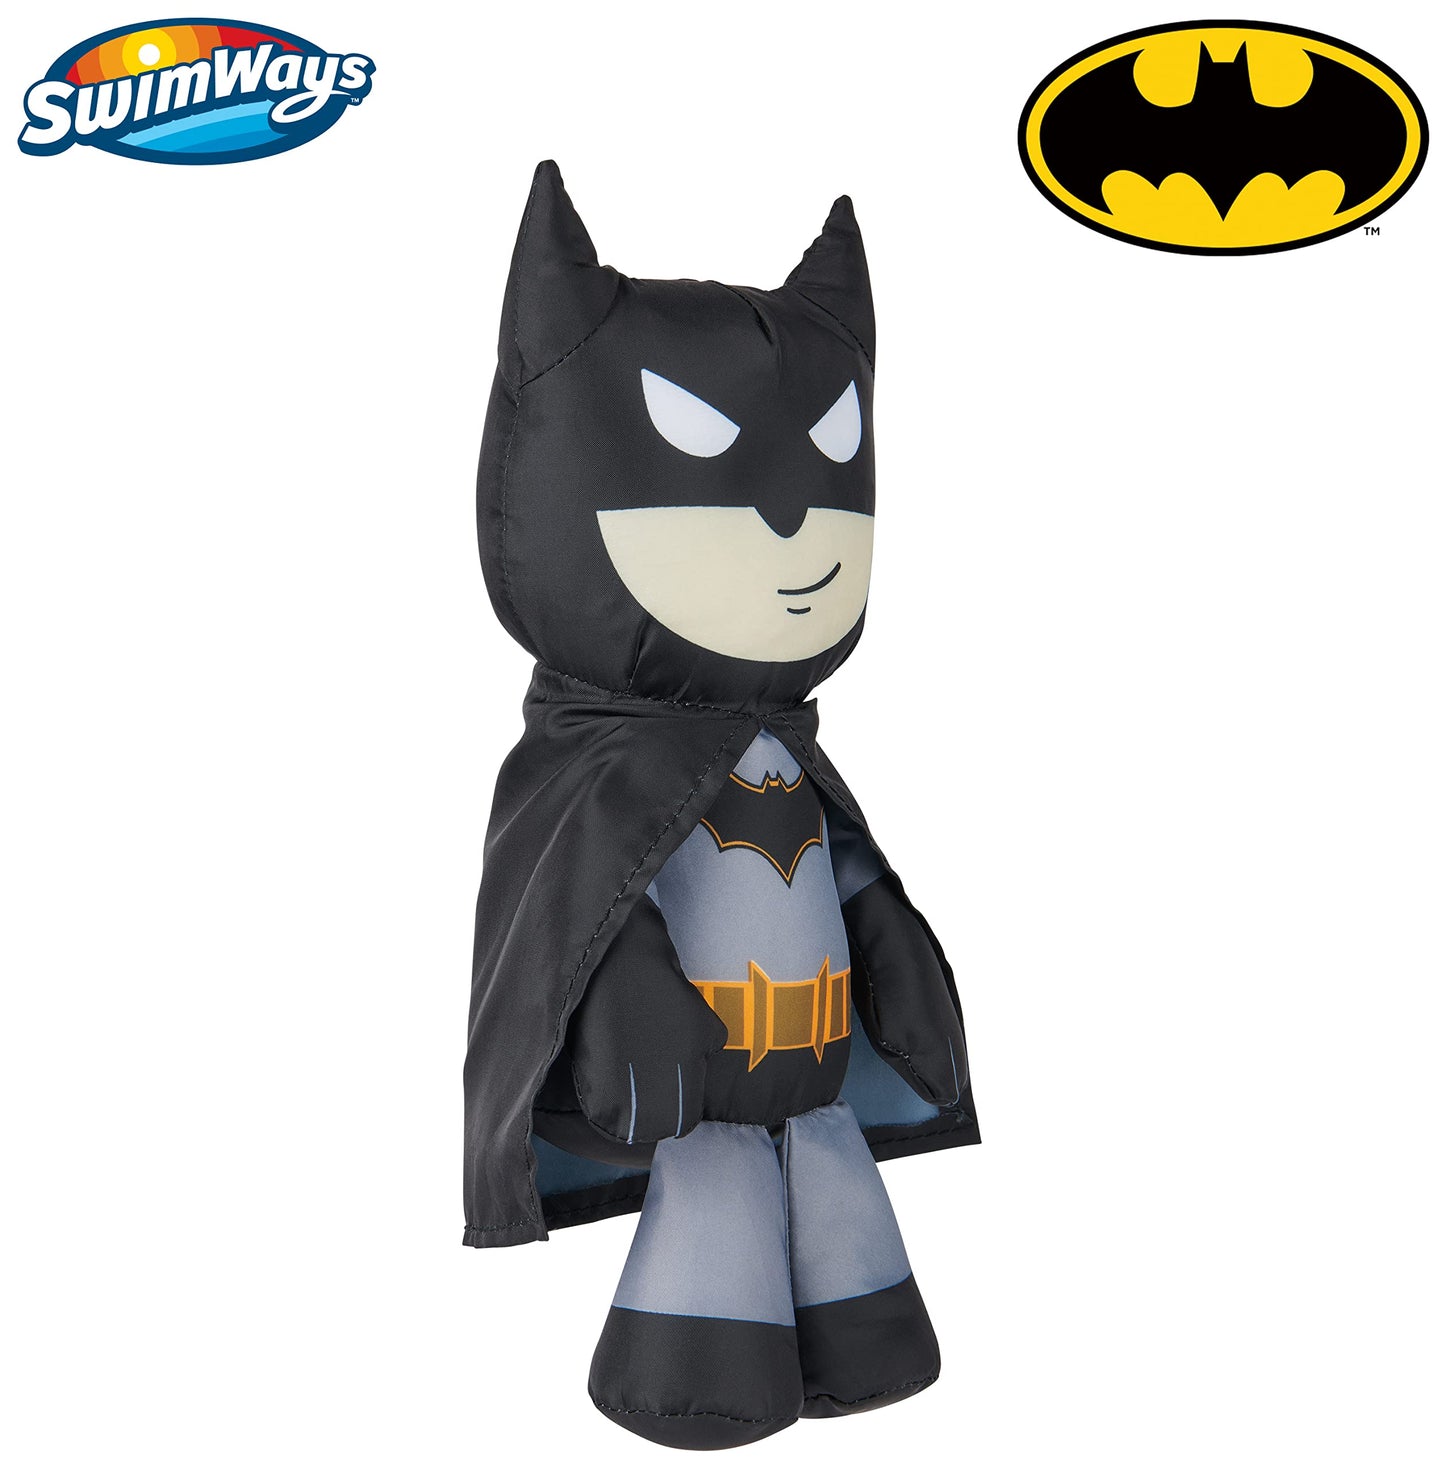 Swimways DC Batman Swim Huggable, Batman Toys, Bath Toys & Beach Toys, Floating Water Stuffed Animal for Kids Aged 1 & Up